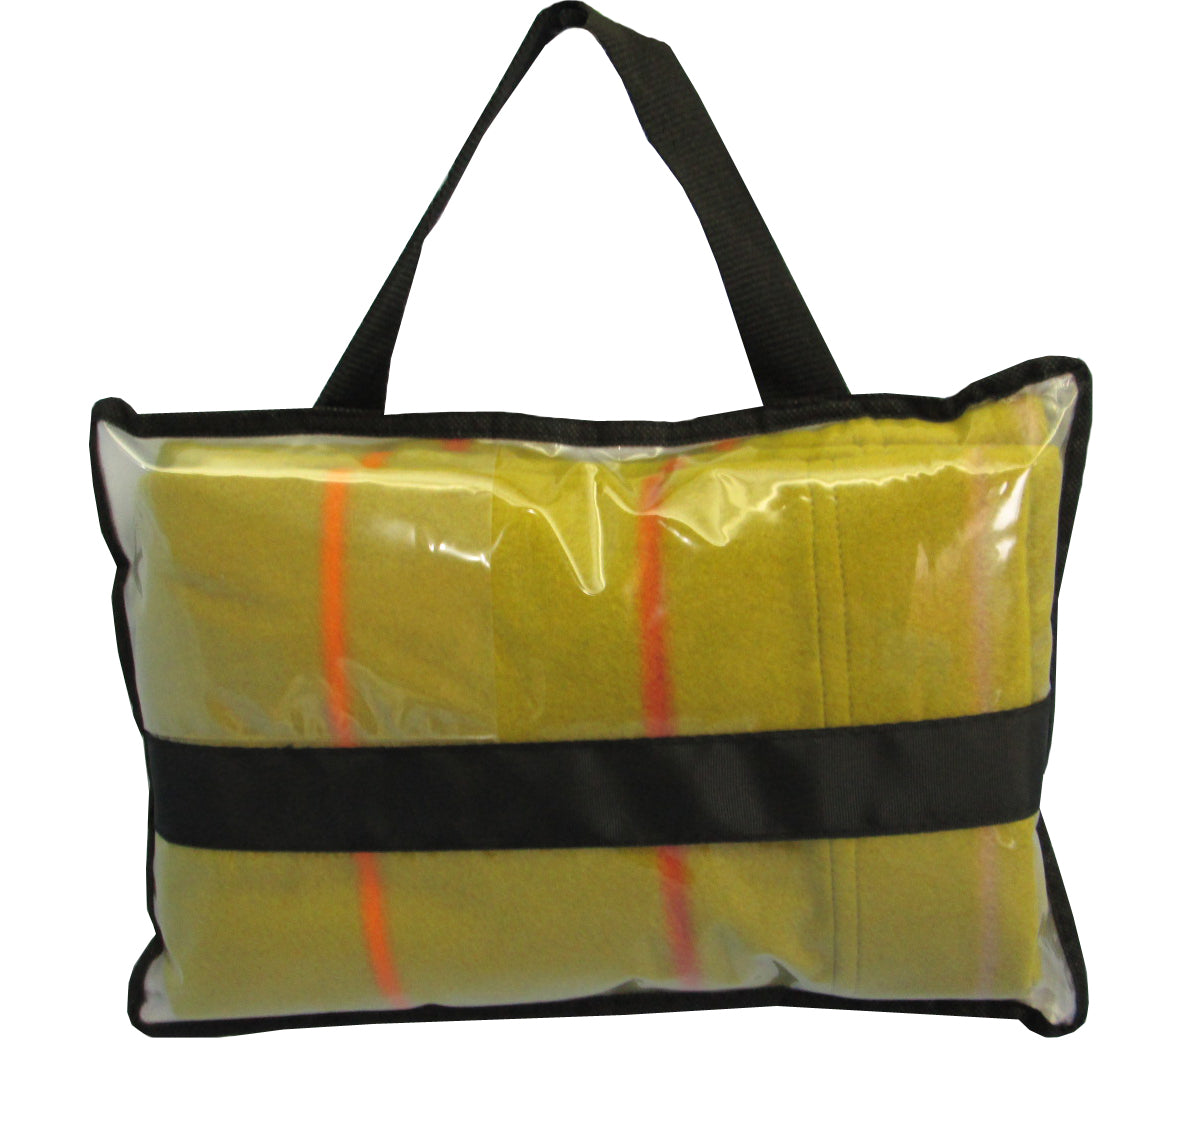 JLSB-0030 Sewn Bag